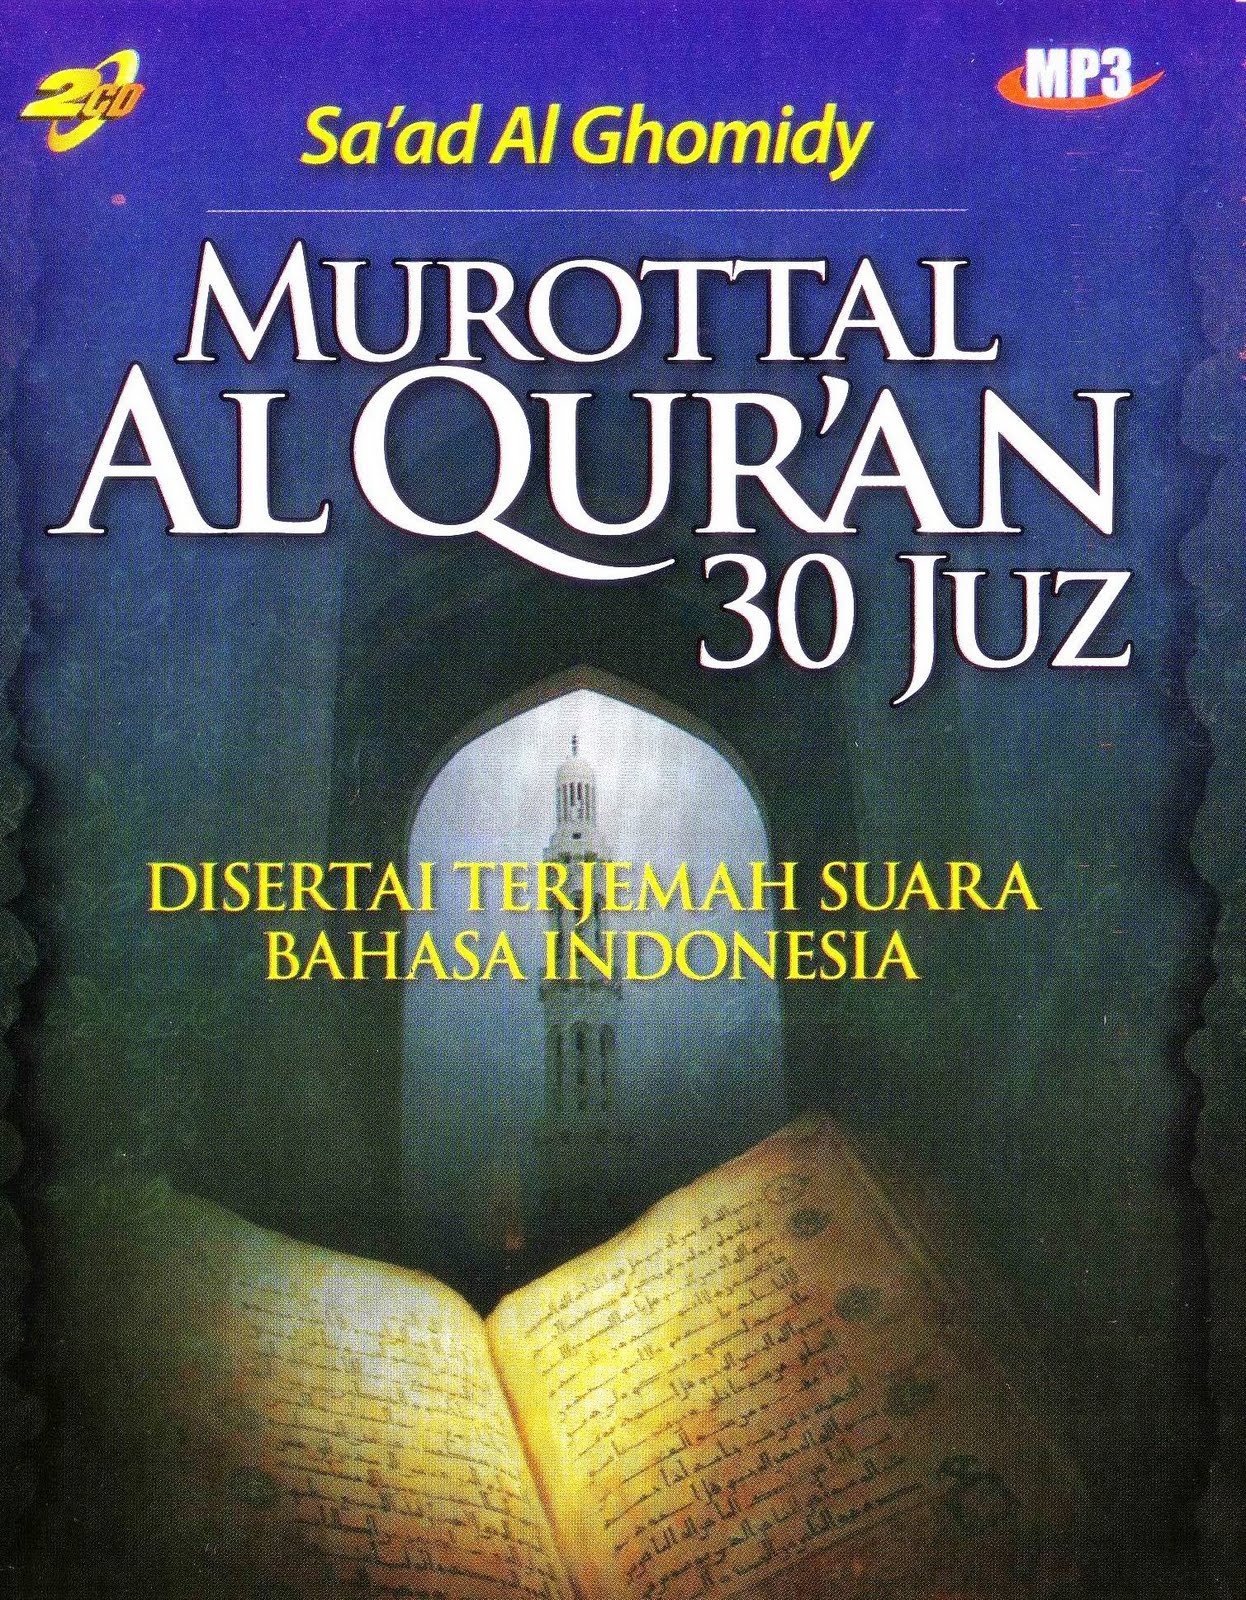 Download Mp3 Murotal al-quran 30 juz komplit single link - Softs Games